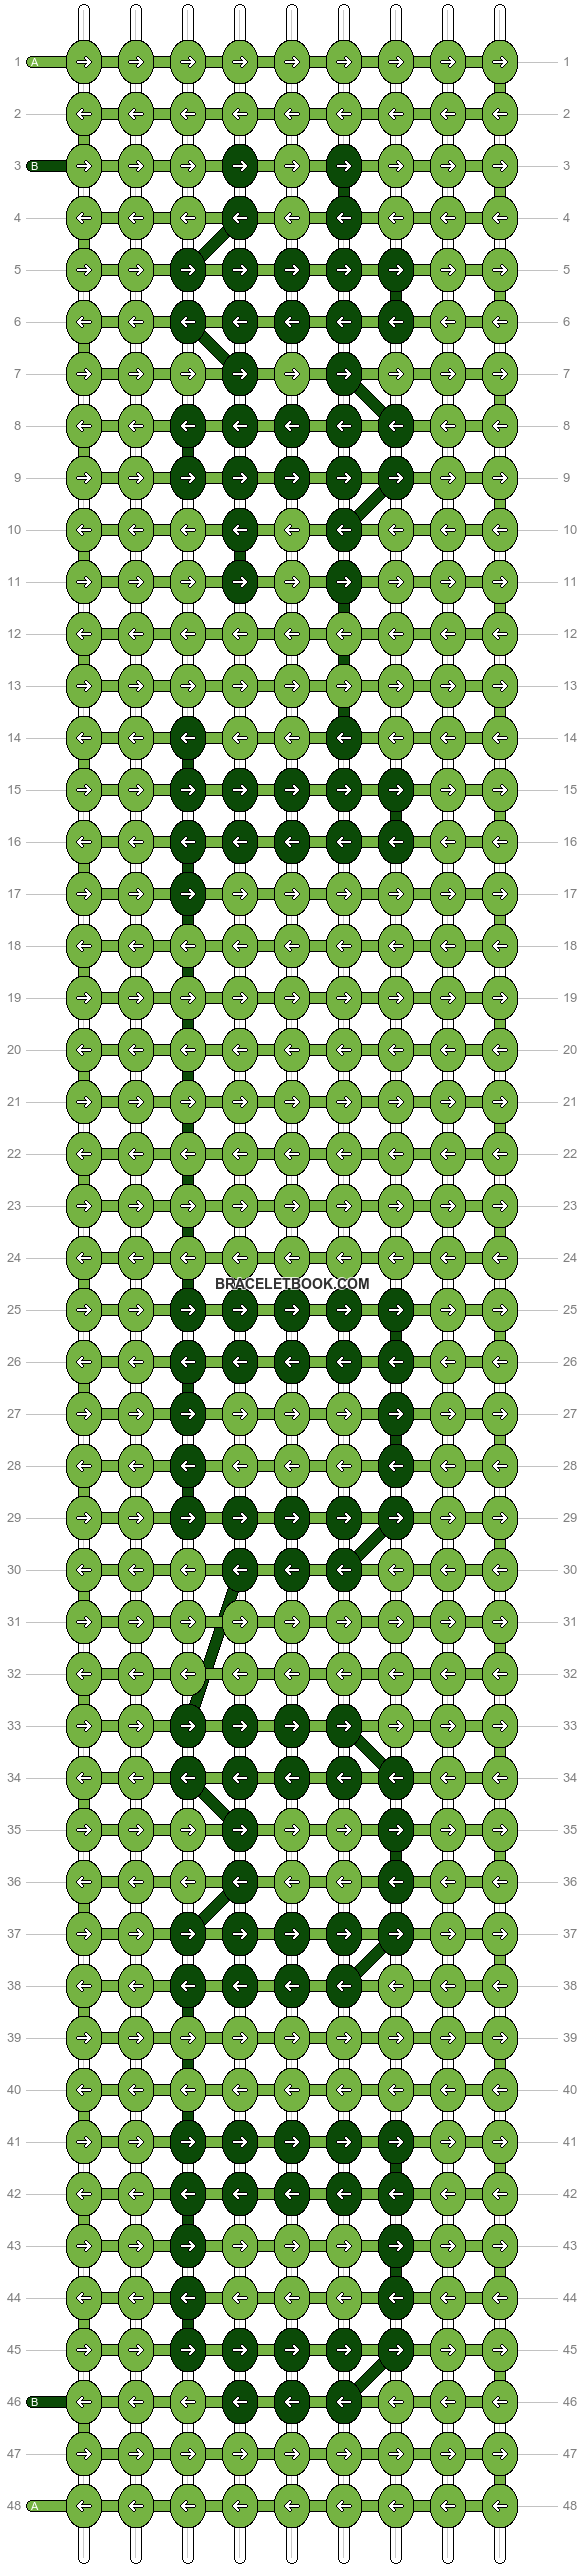 Alpha pattern #6053 variation #140673 pattern